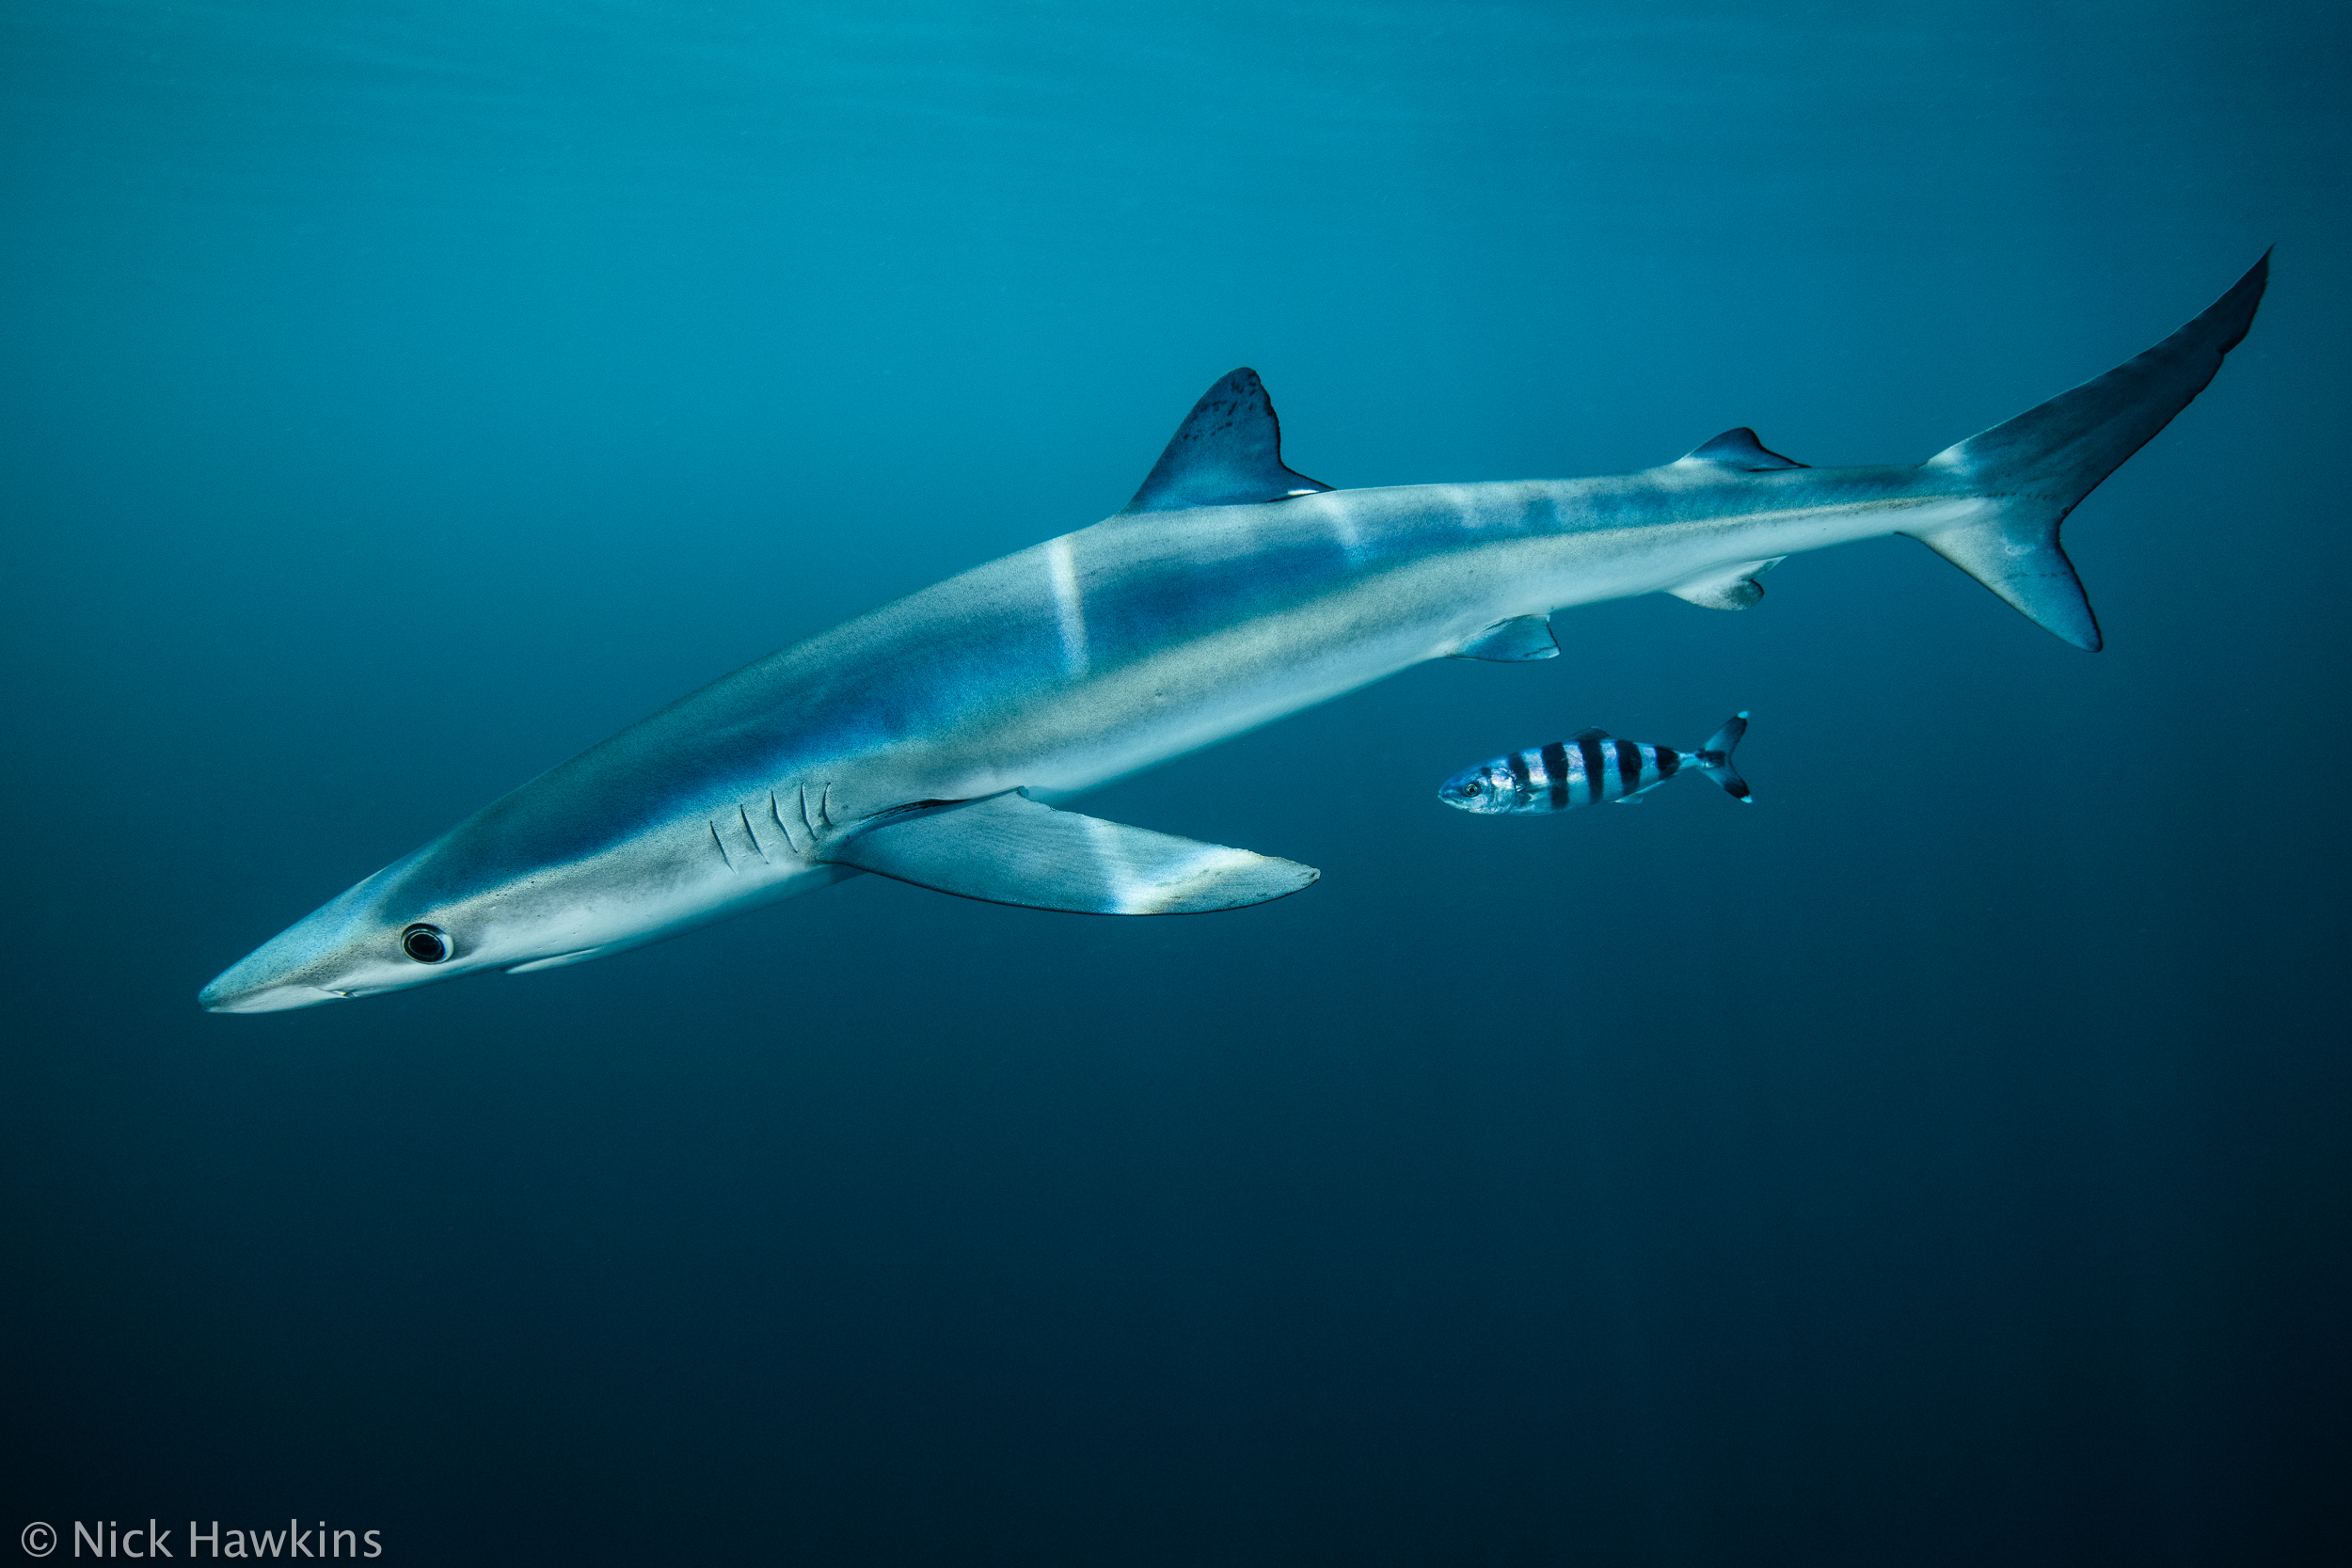 A blue shark swims alongside a smaller fish.